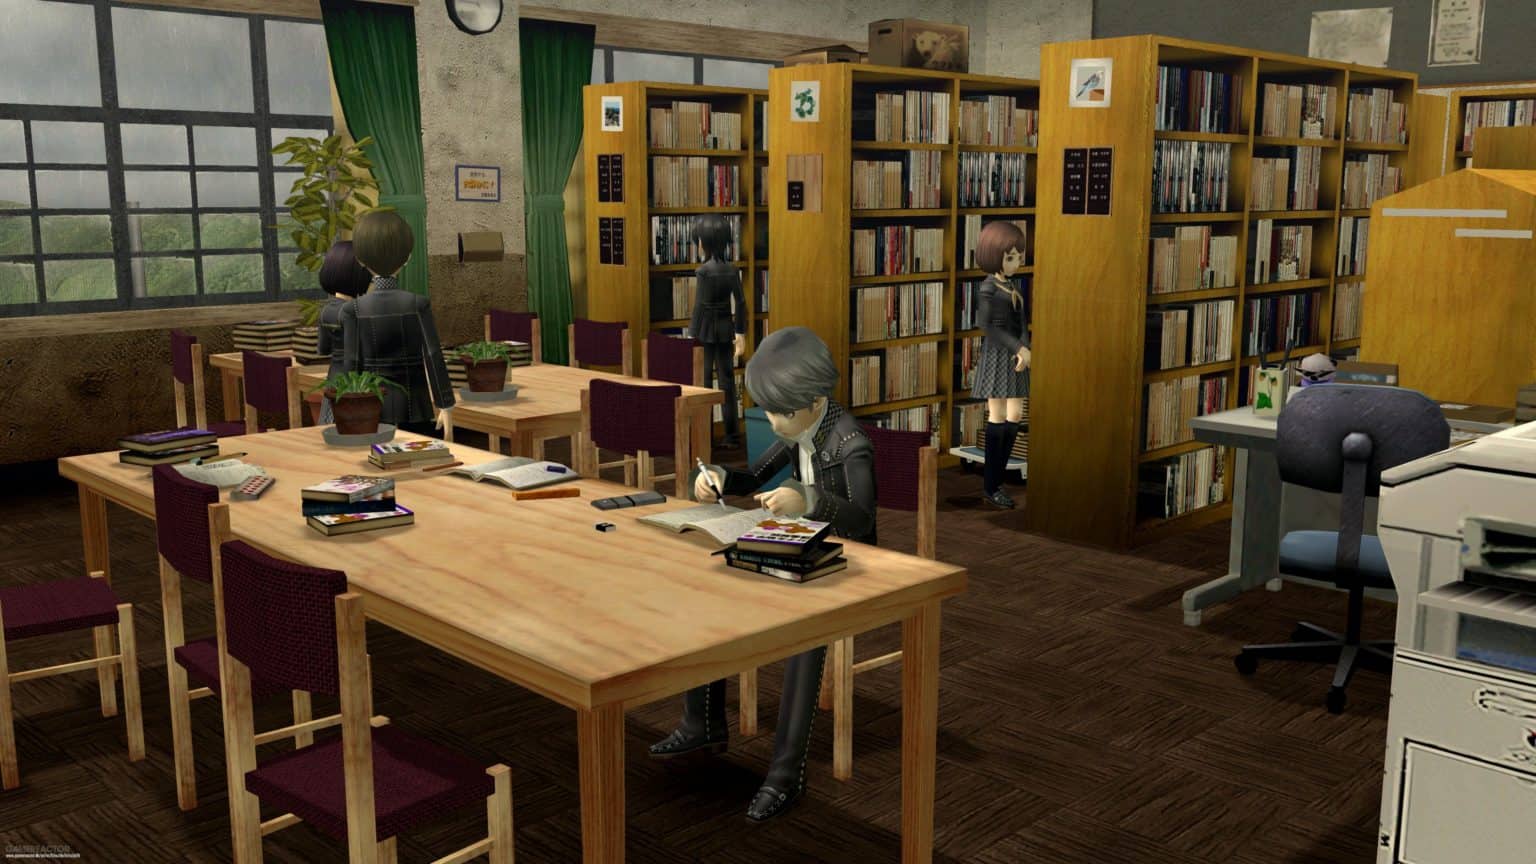 Библиотека 4 часть. Persona 5 books in Library.